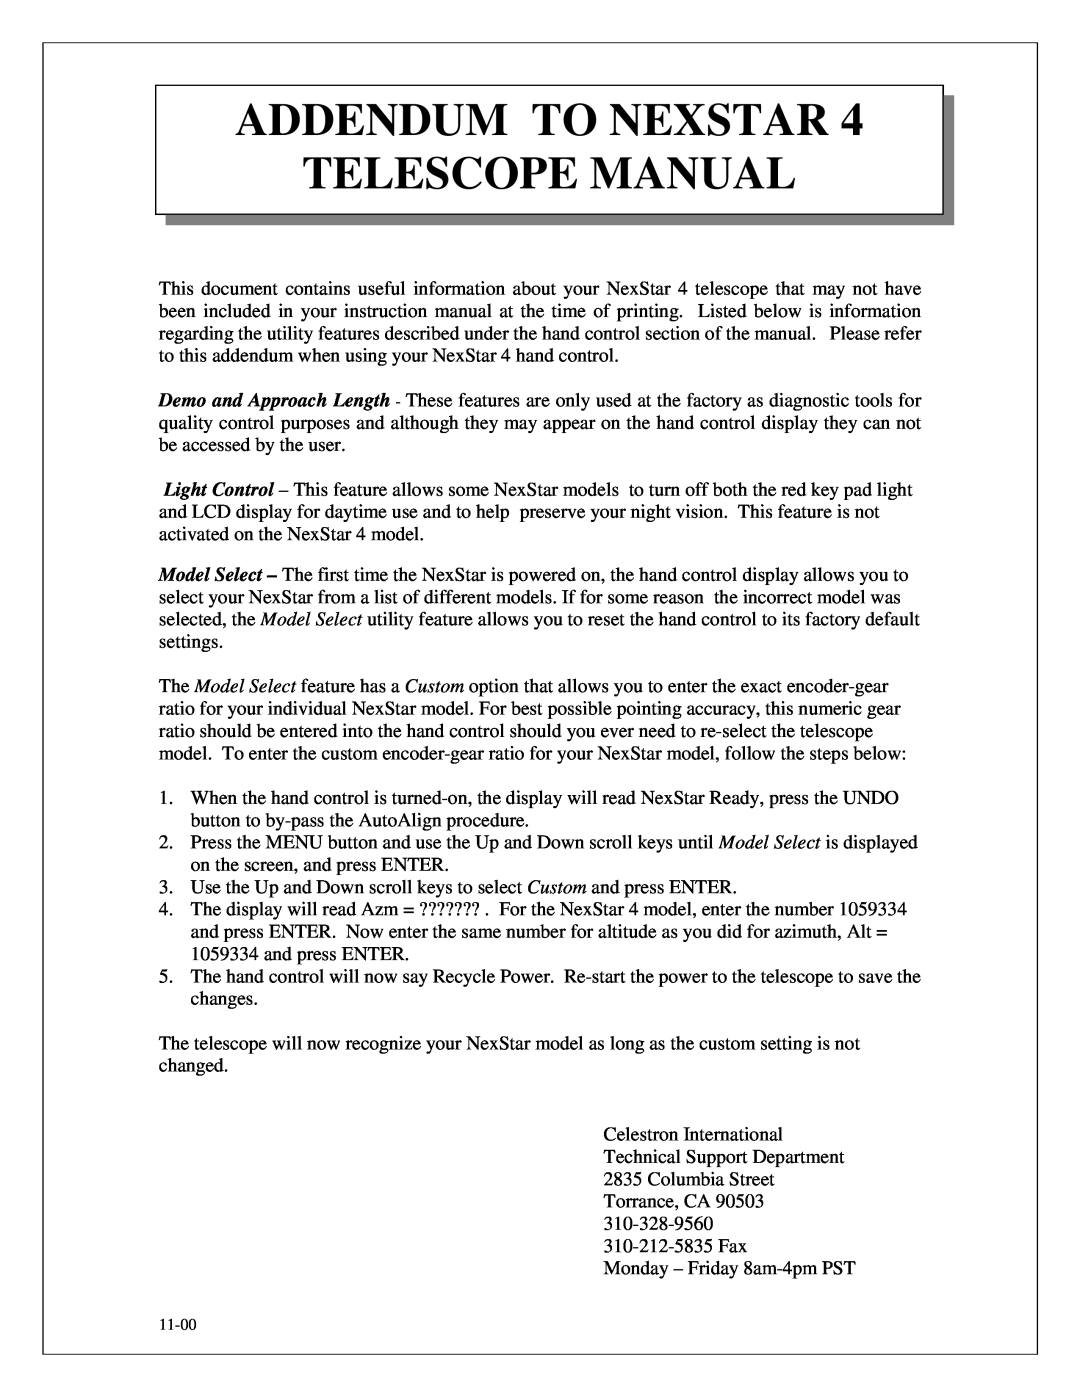 Celestron NexStar HC manual Addendum To Nexstar Telescope Manual 